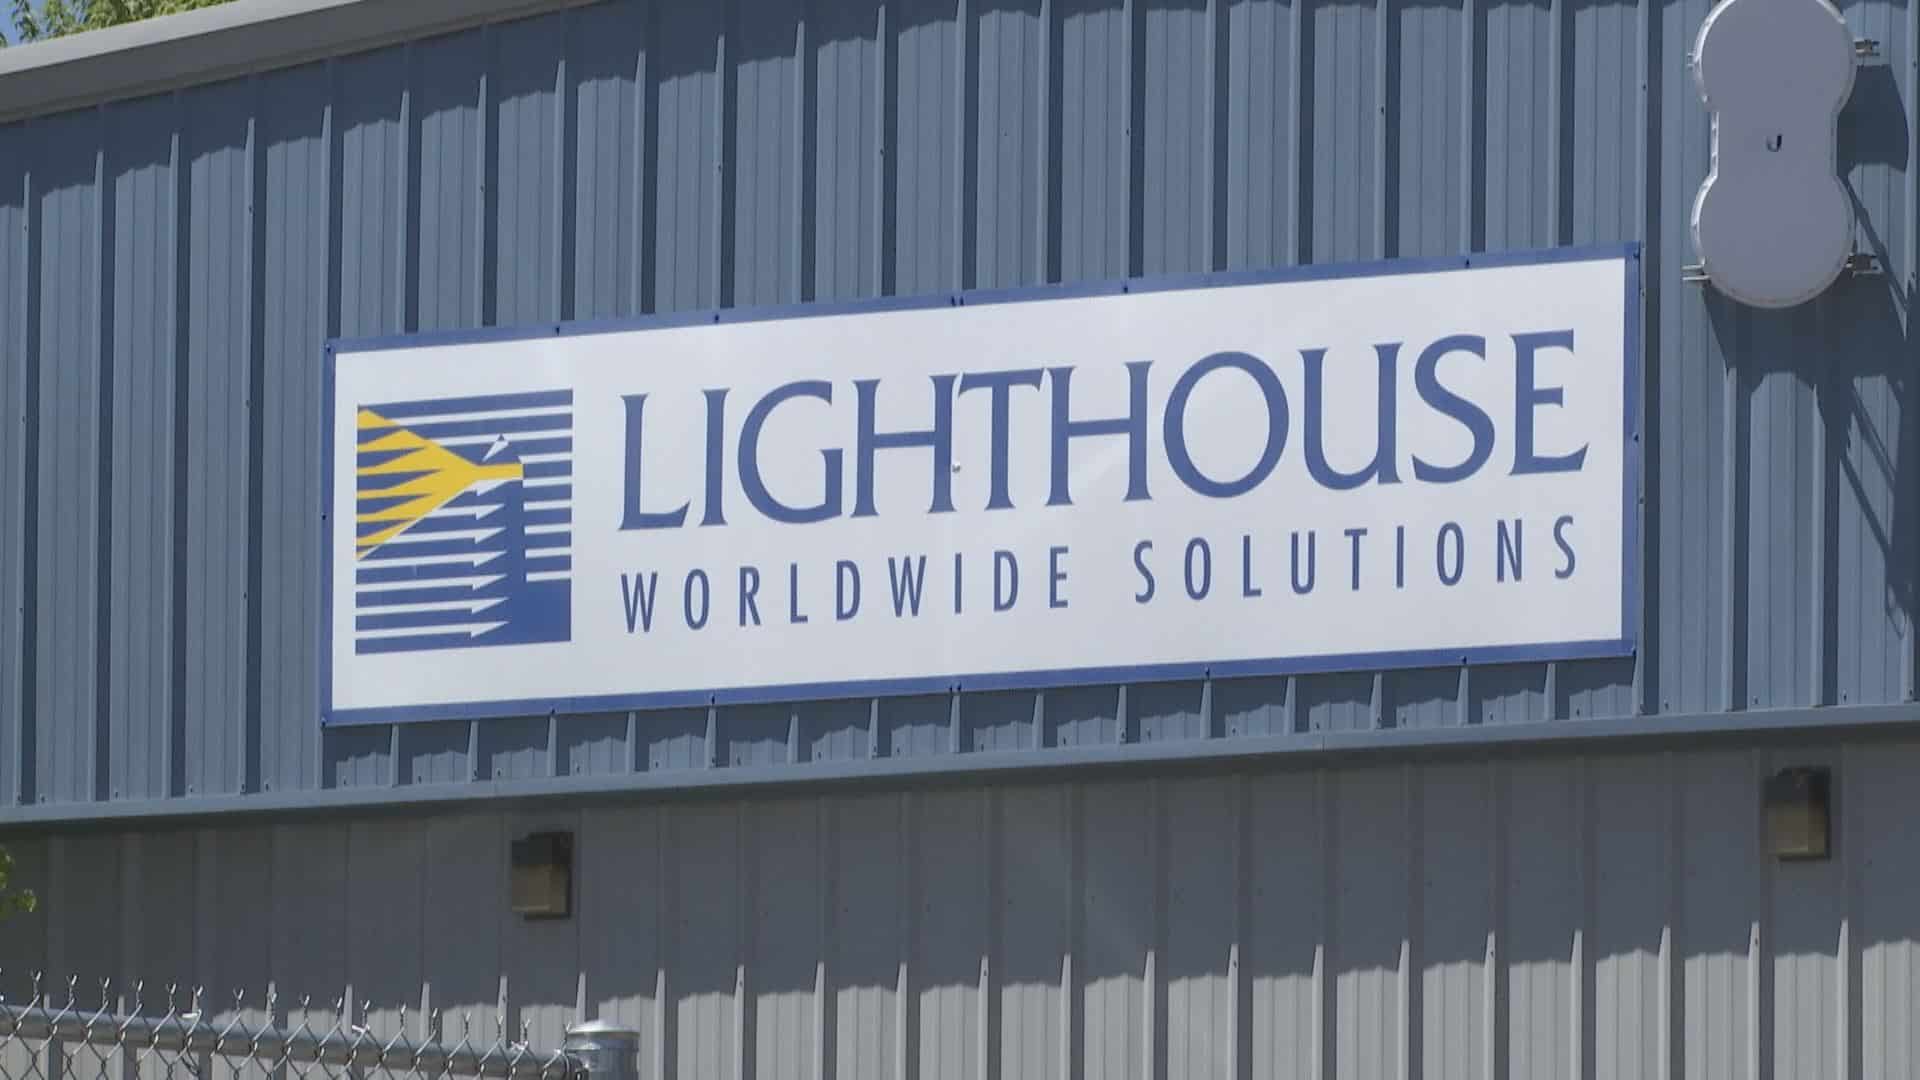 Lighthouse Worldwide Solutions brand